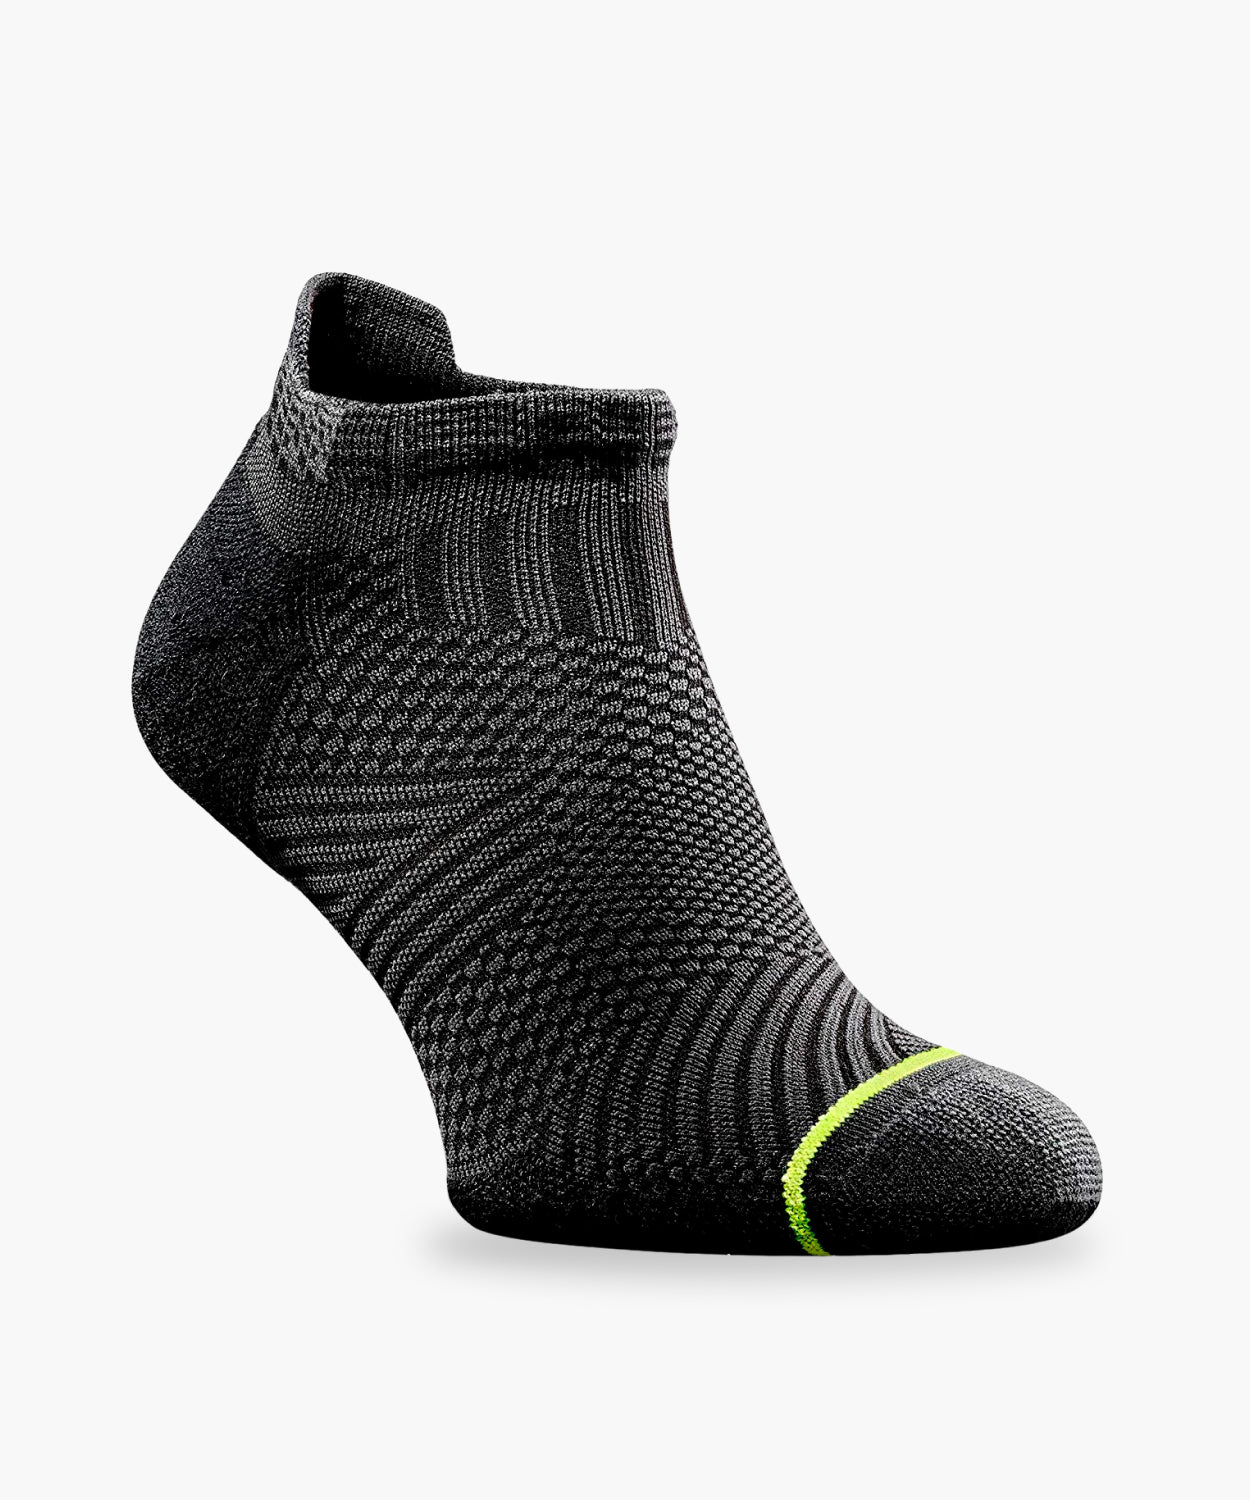 Accelerate Wool Socks